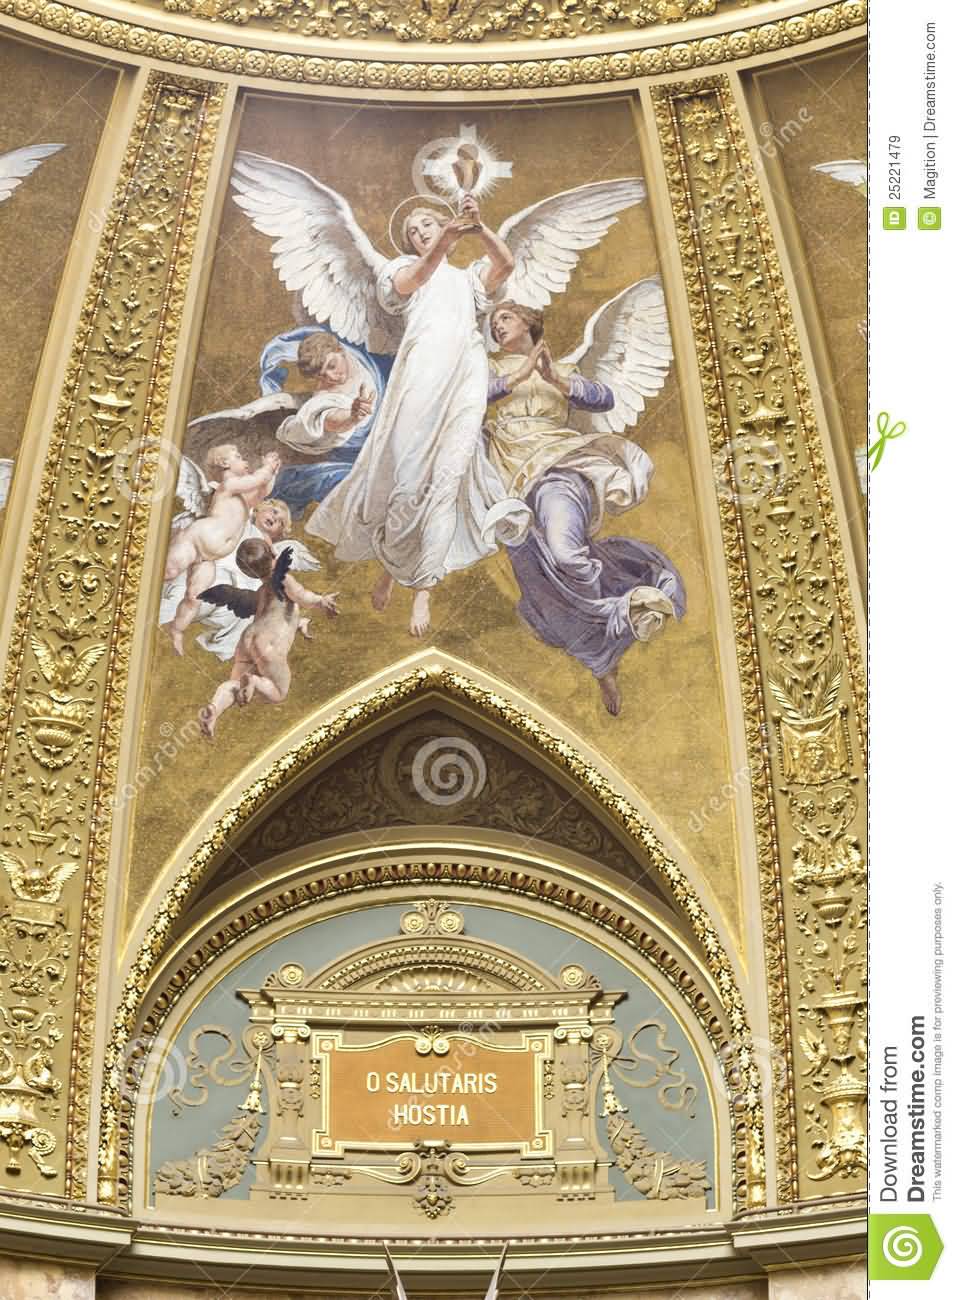 St. Stephen's Basilica Interior Fresco Details